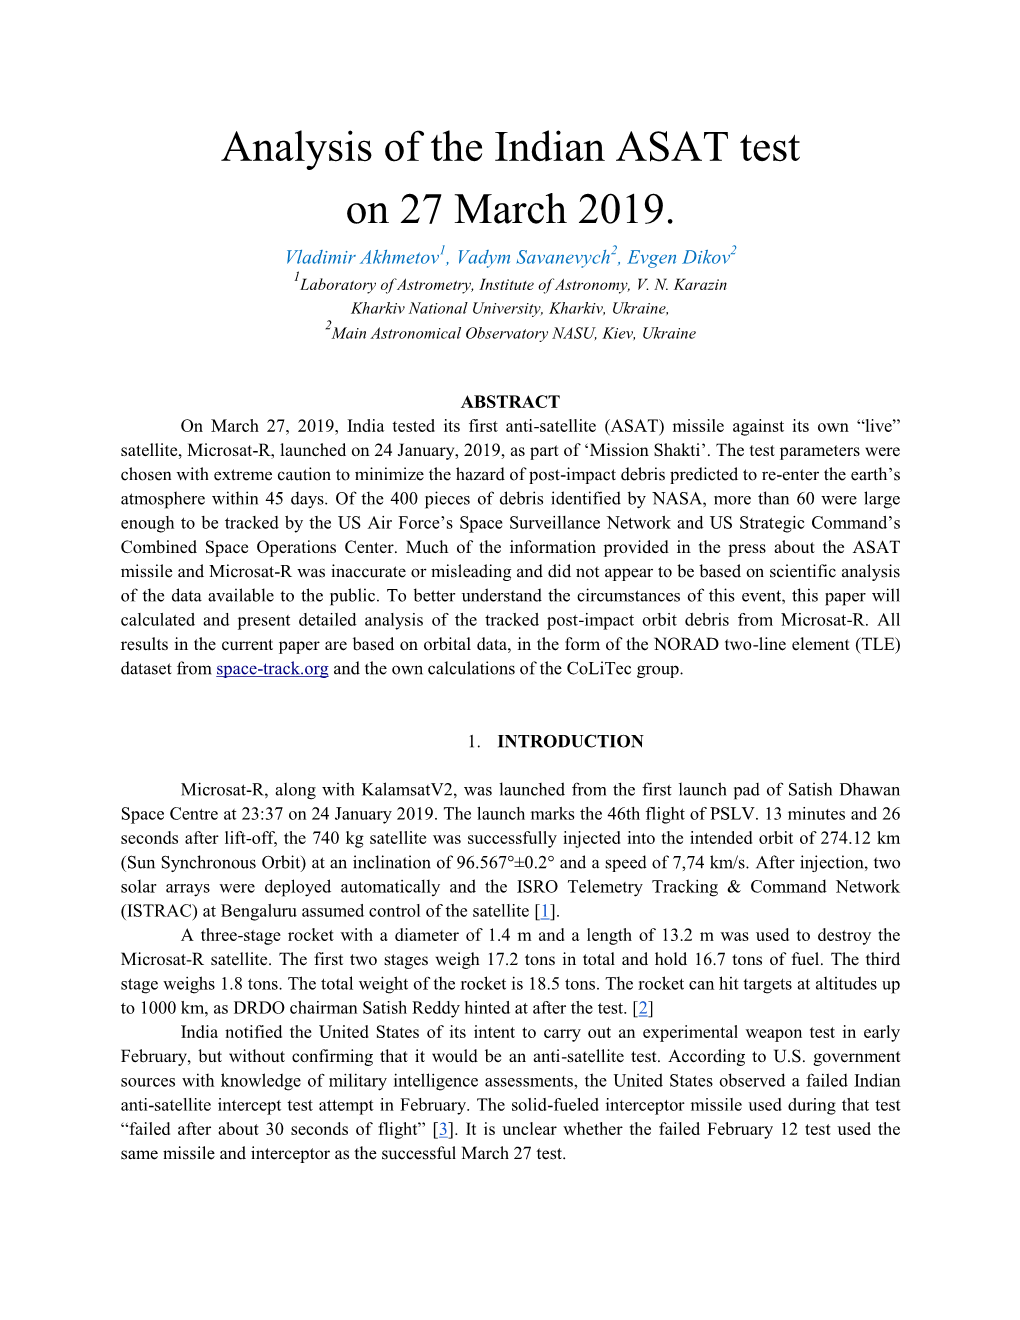 Analysis of the Indian ASAT Test on 27 March 2019. Vladimir Akhmetov1, Vadym Savanevych2, Evgen Dikov2 1Laboratory of Astrometry, Institute of Astronomy, V